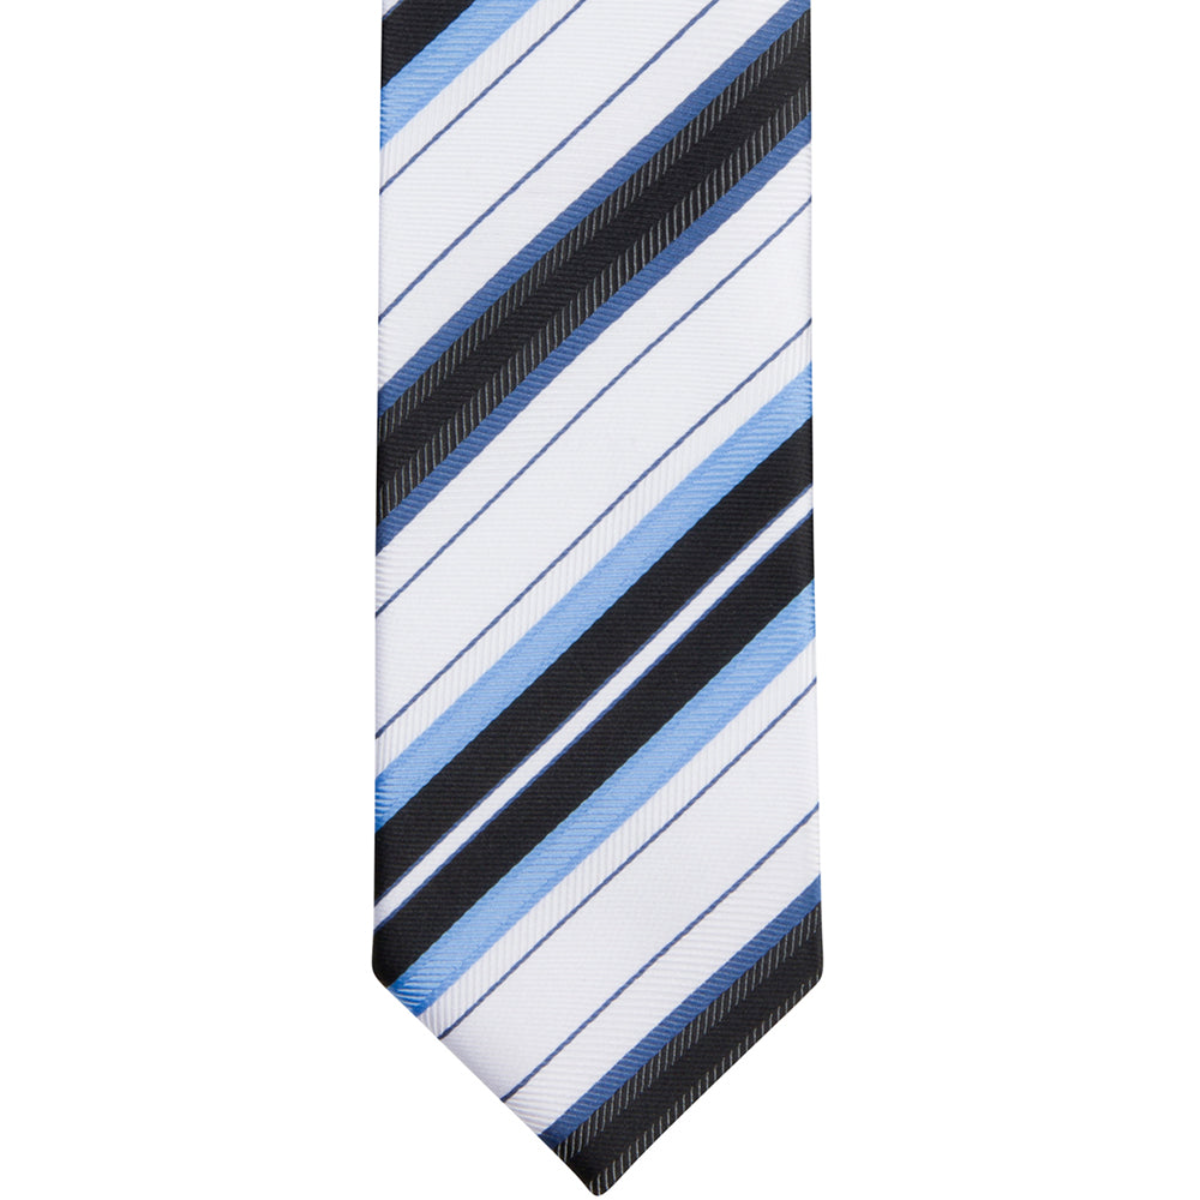 W1 - White/Blue/Black Multi Stripe Narrow Width Necktie